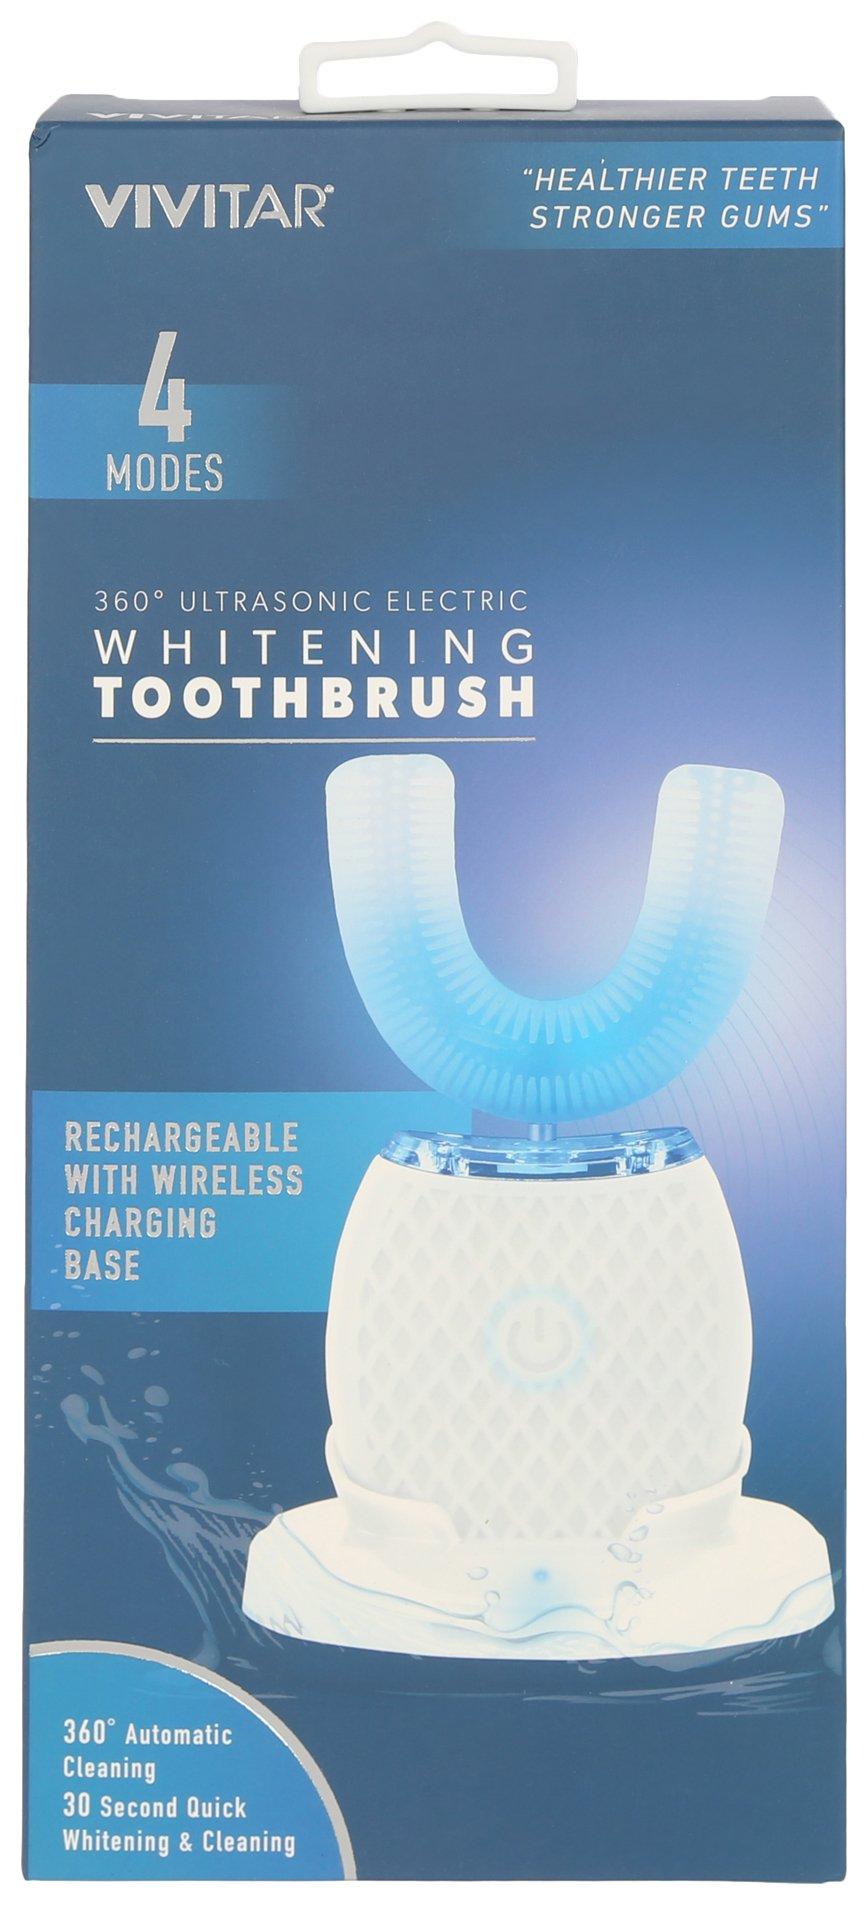 Ultrasonic Rechargeable Whitening Toothbrush